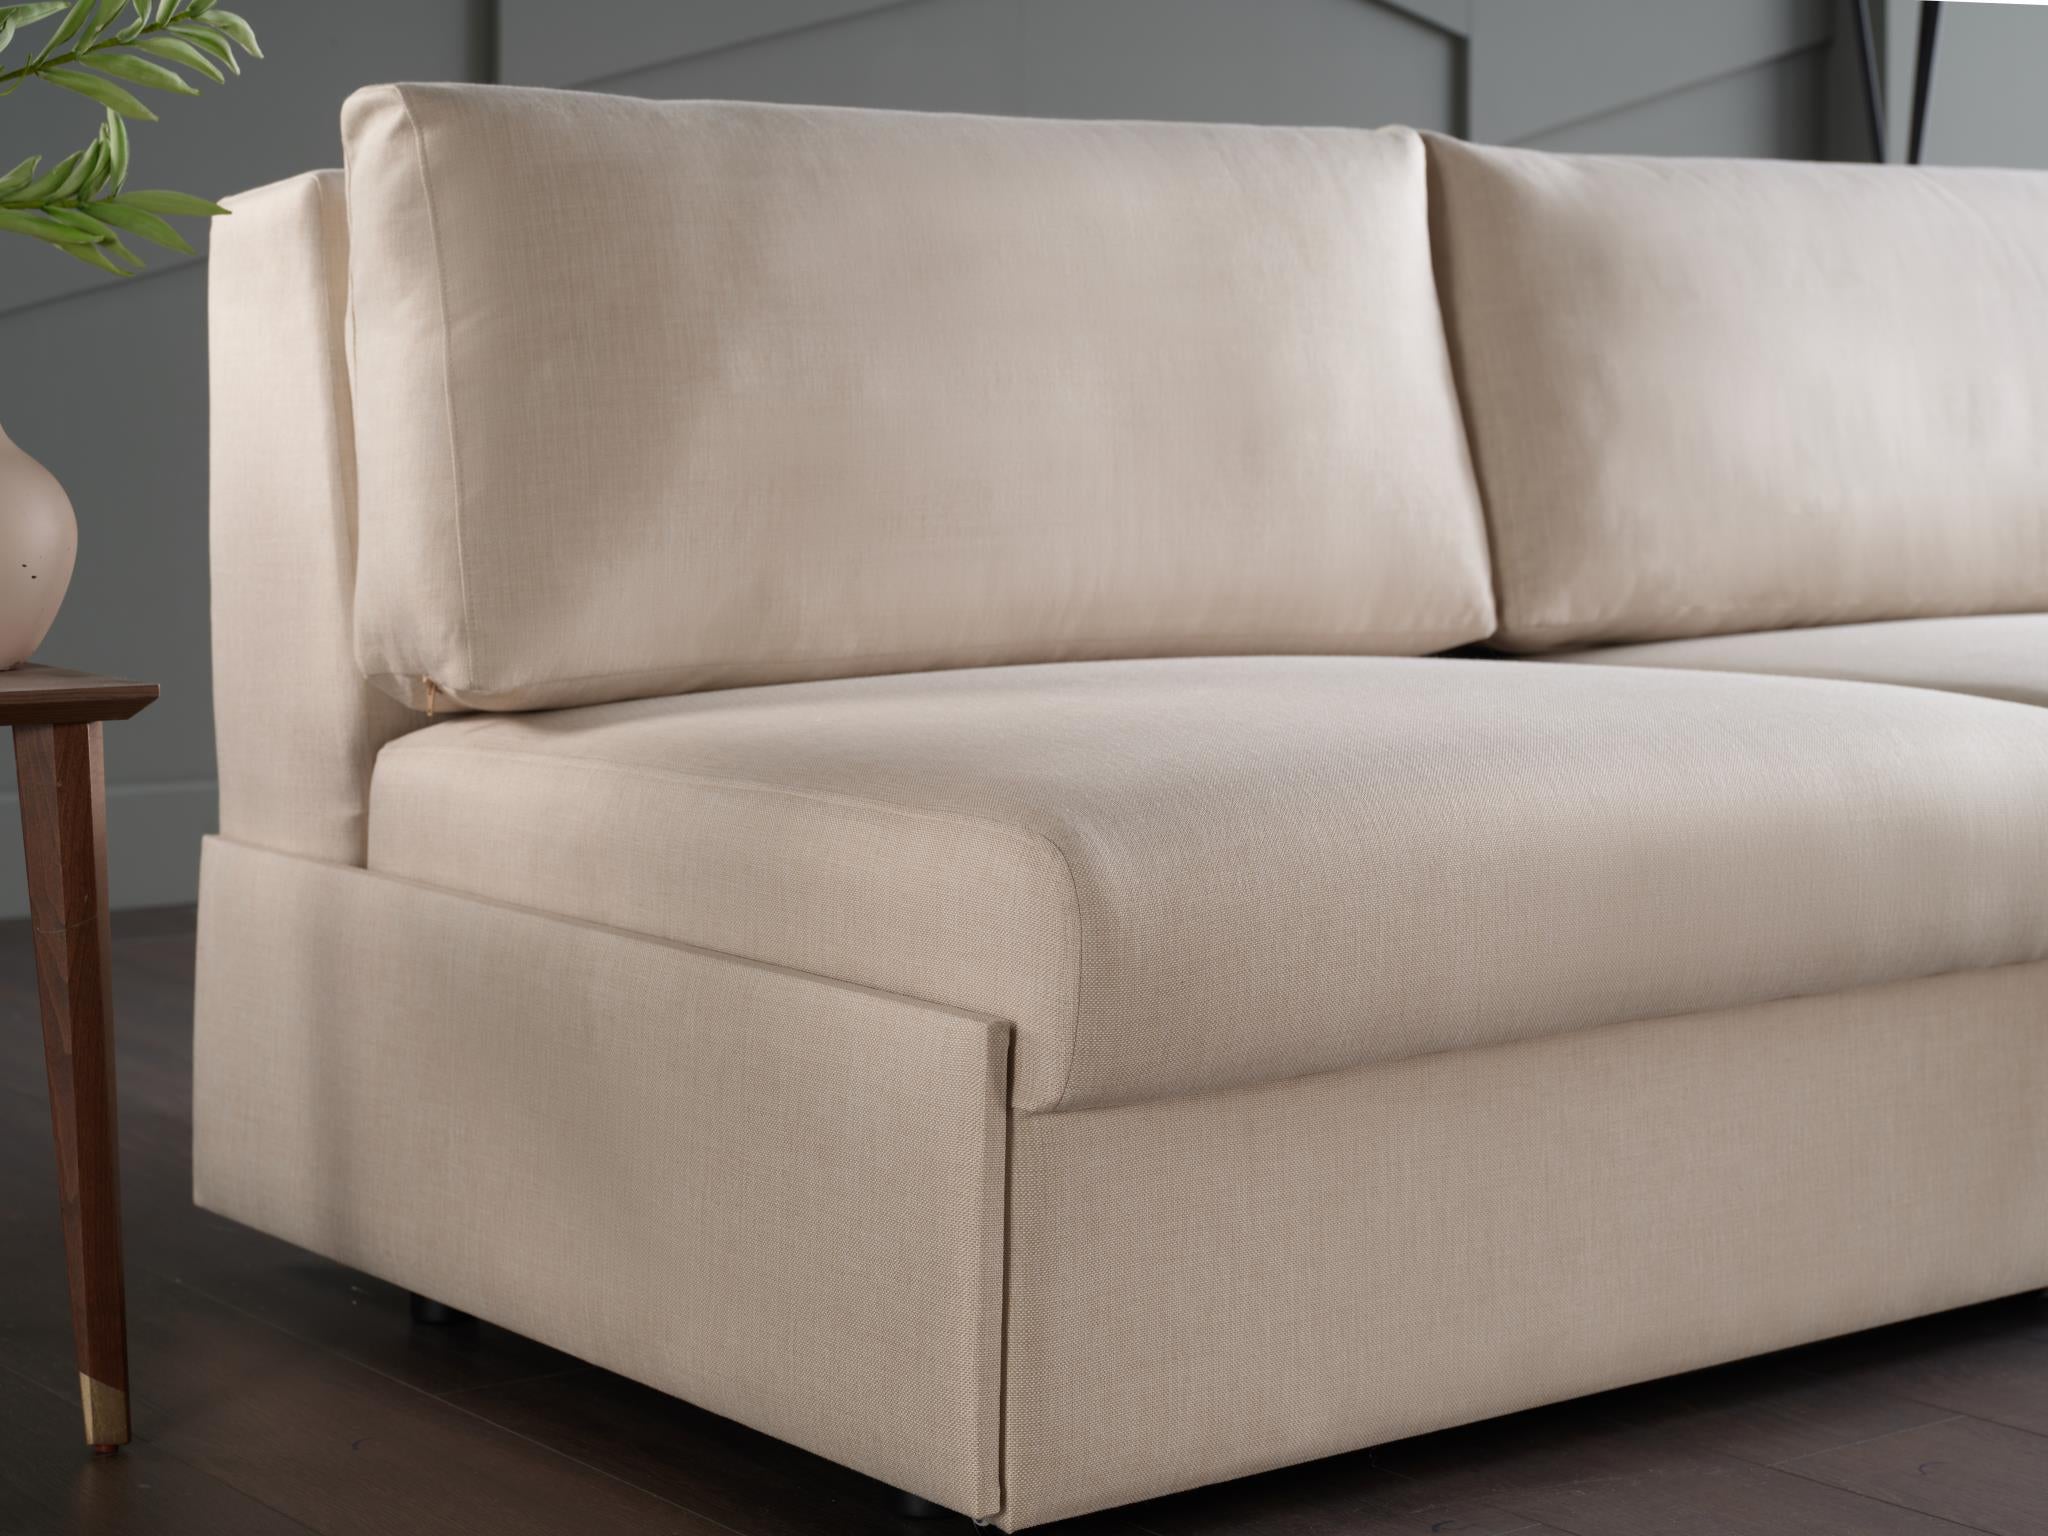 Ava 3 Seat Sleeper - Home Store Furniture